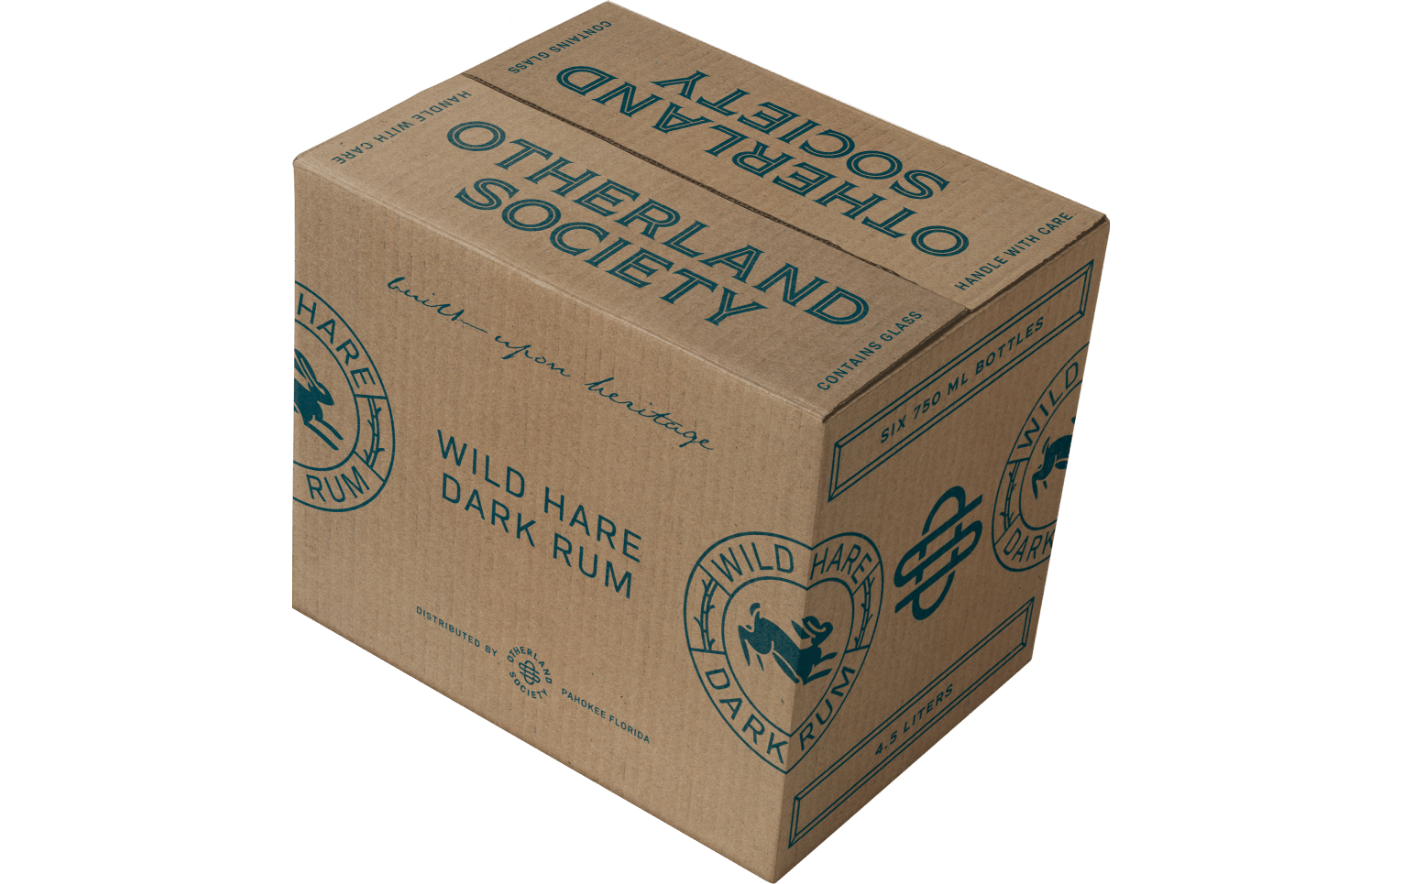 Cardboard box carton with Otherland Society Wild Hare Dark Rum branding graphics printed in dark blue